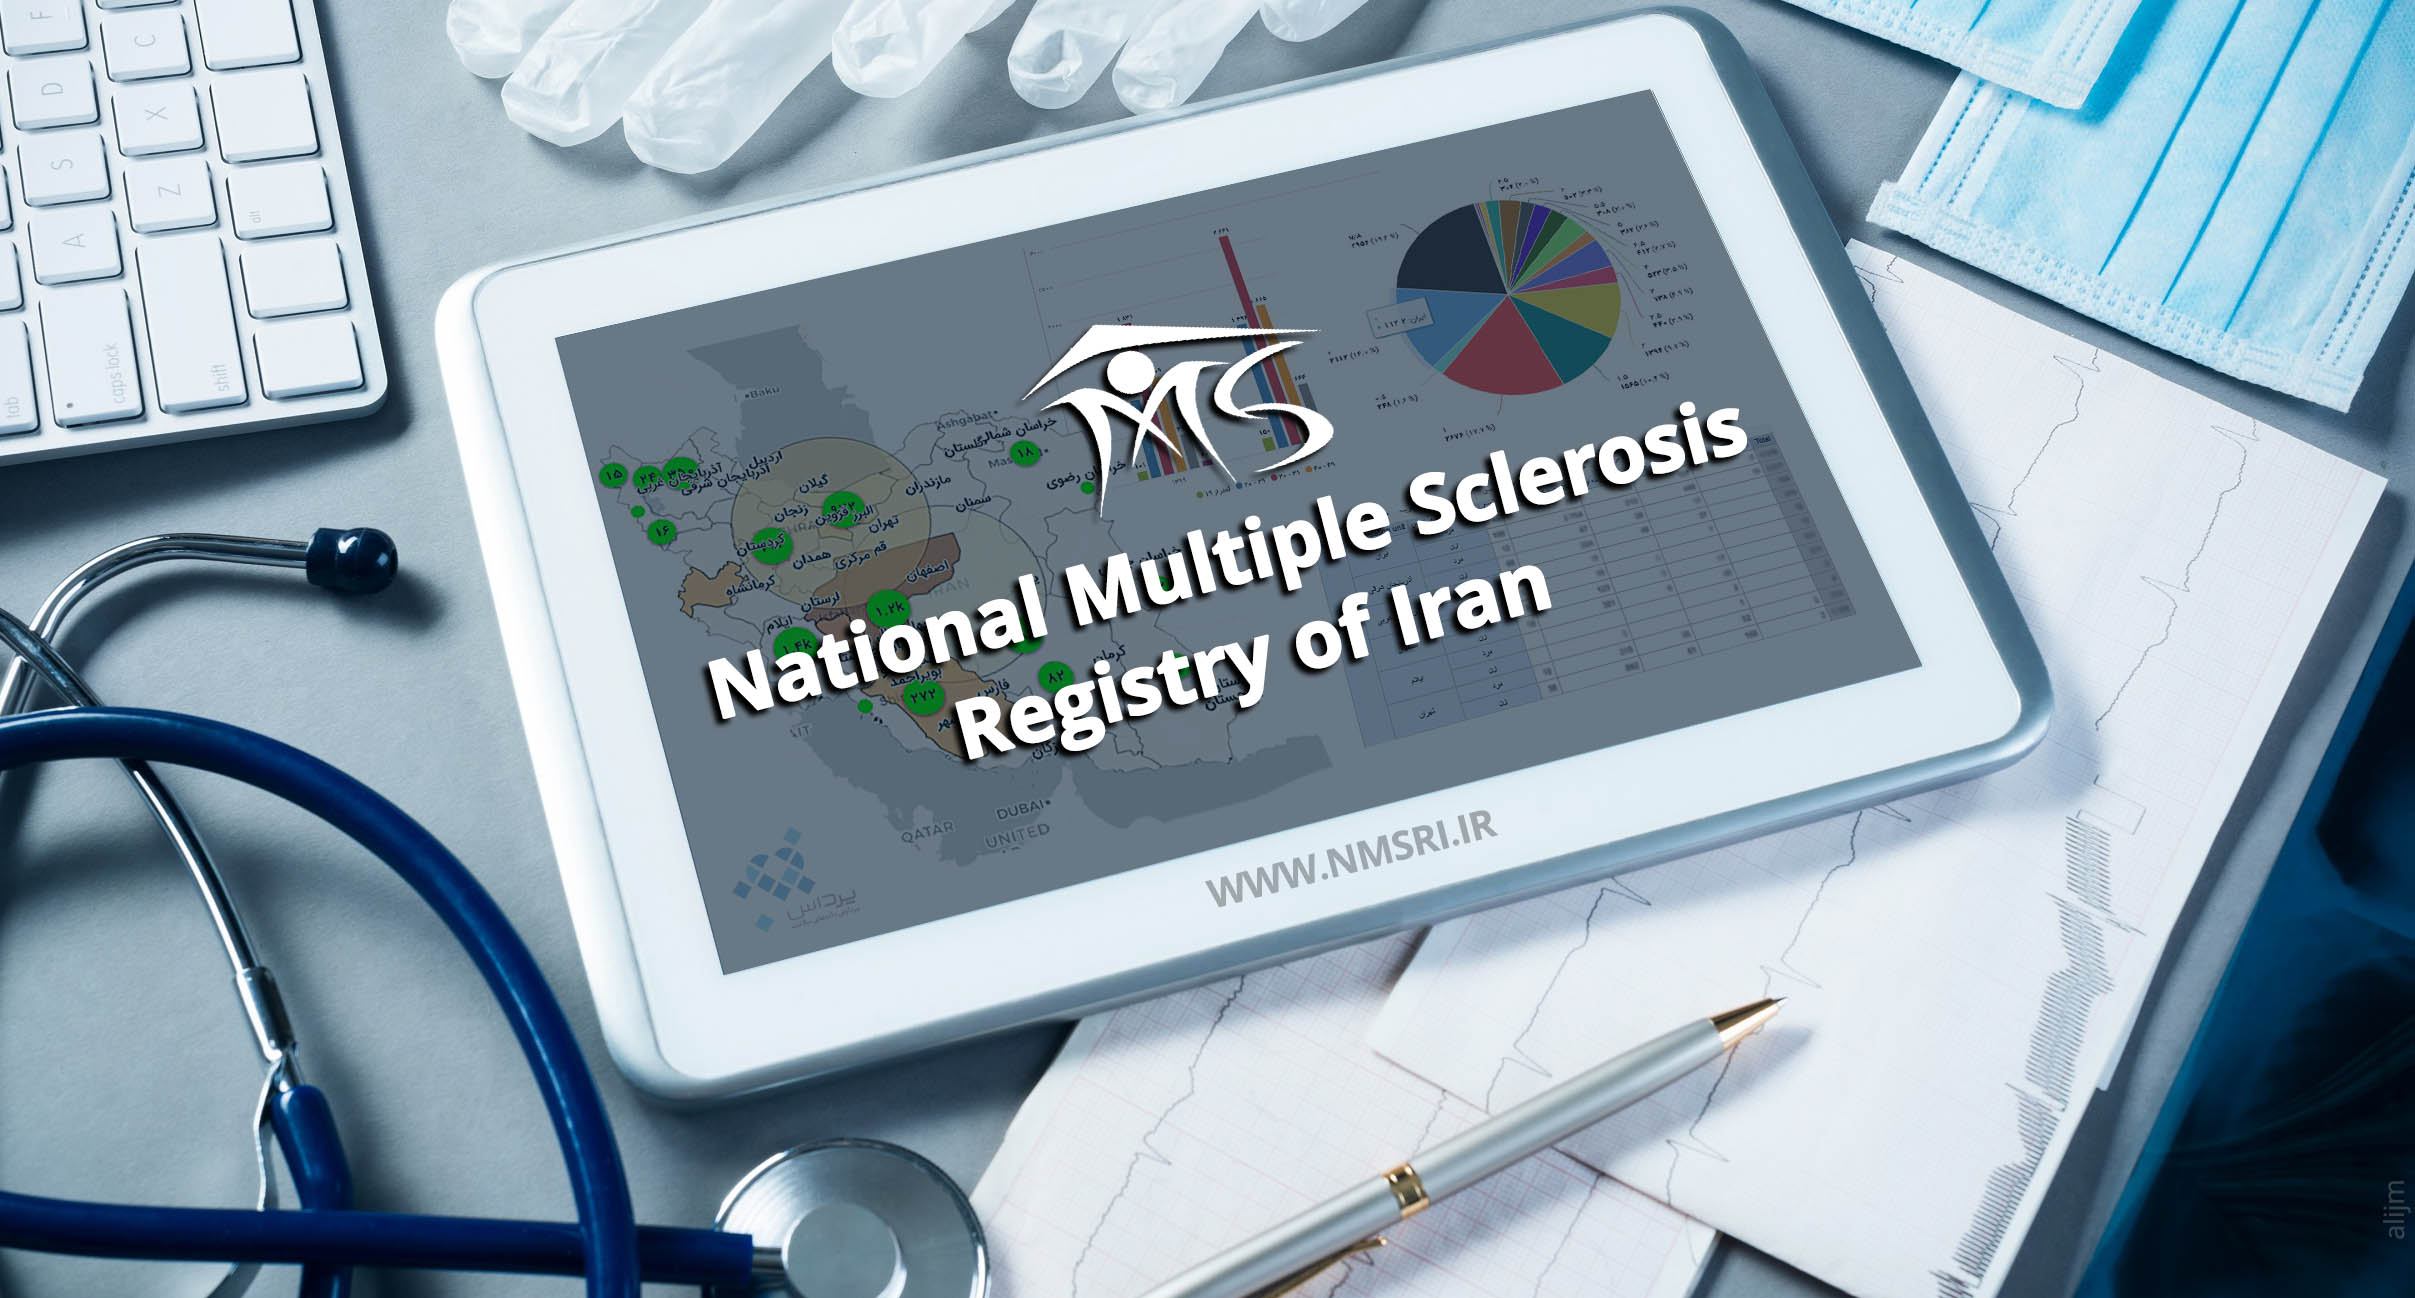 National Multiple Sclerosis Registry of Iran